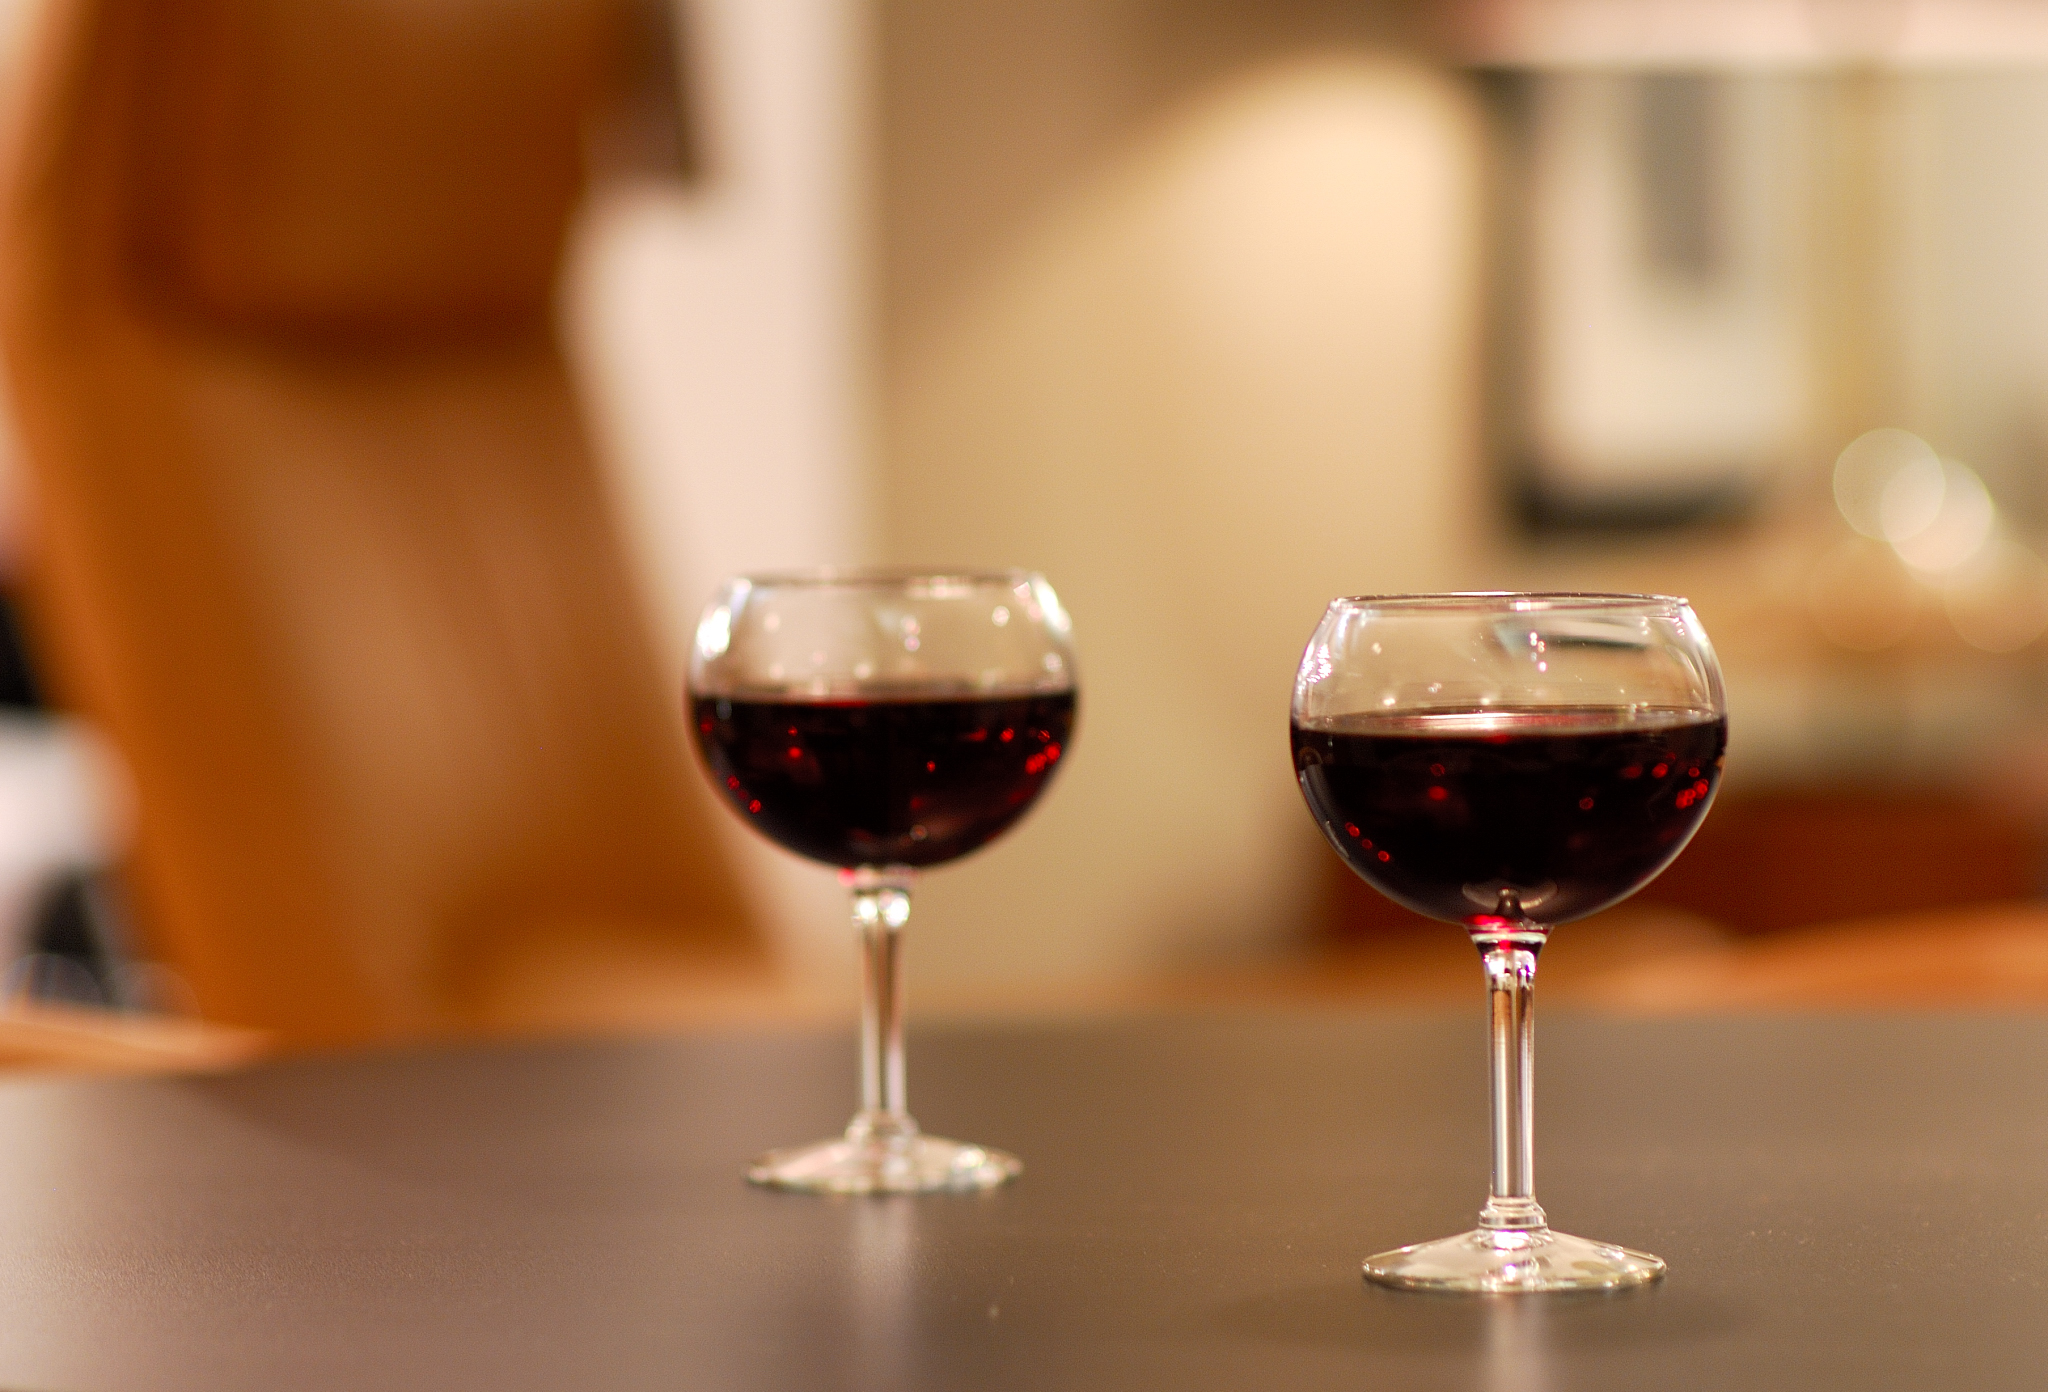 https://upload.wikimedia.org/wikipedia/commons/6/66/Pair_of_wine_glasses.jpg